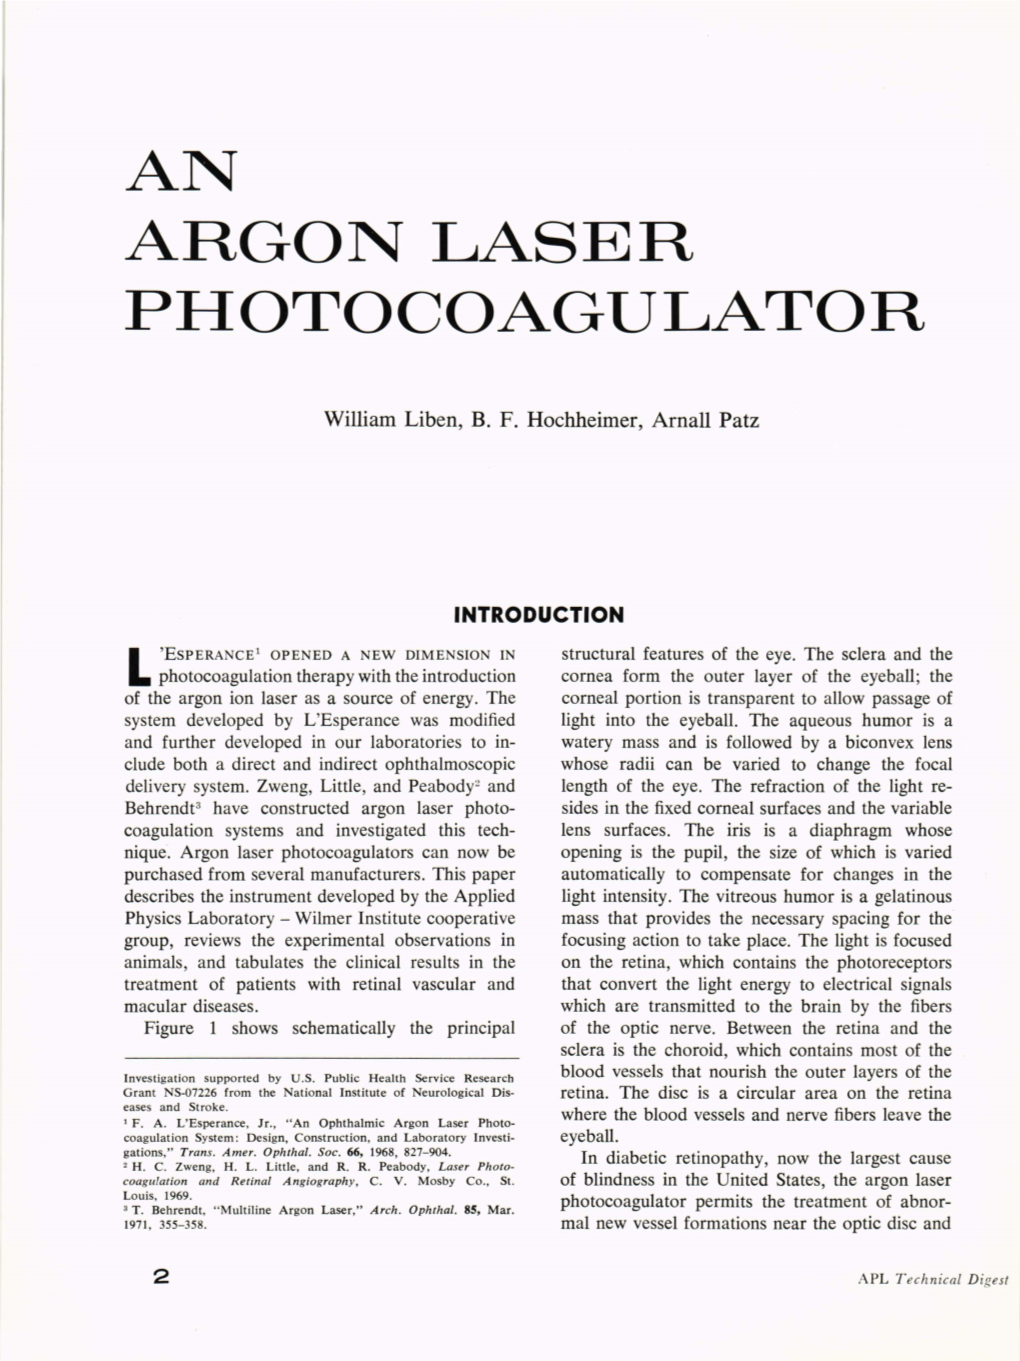 An Argon Laser Photocoagulator